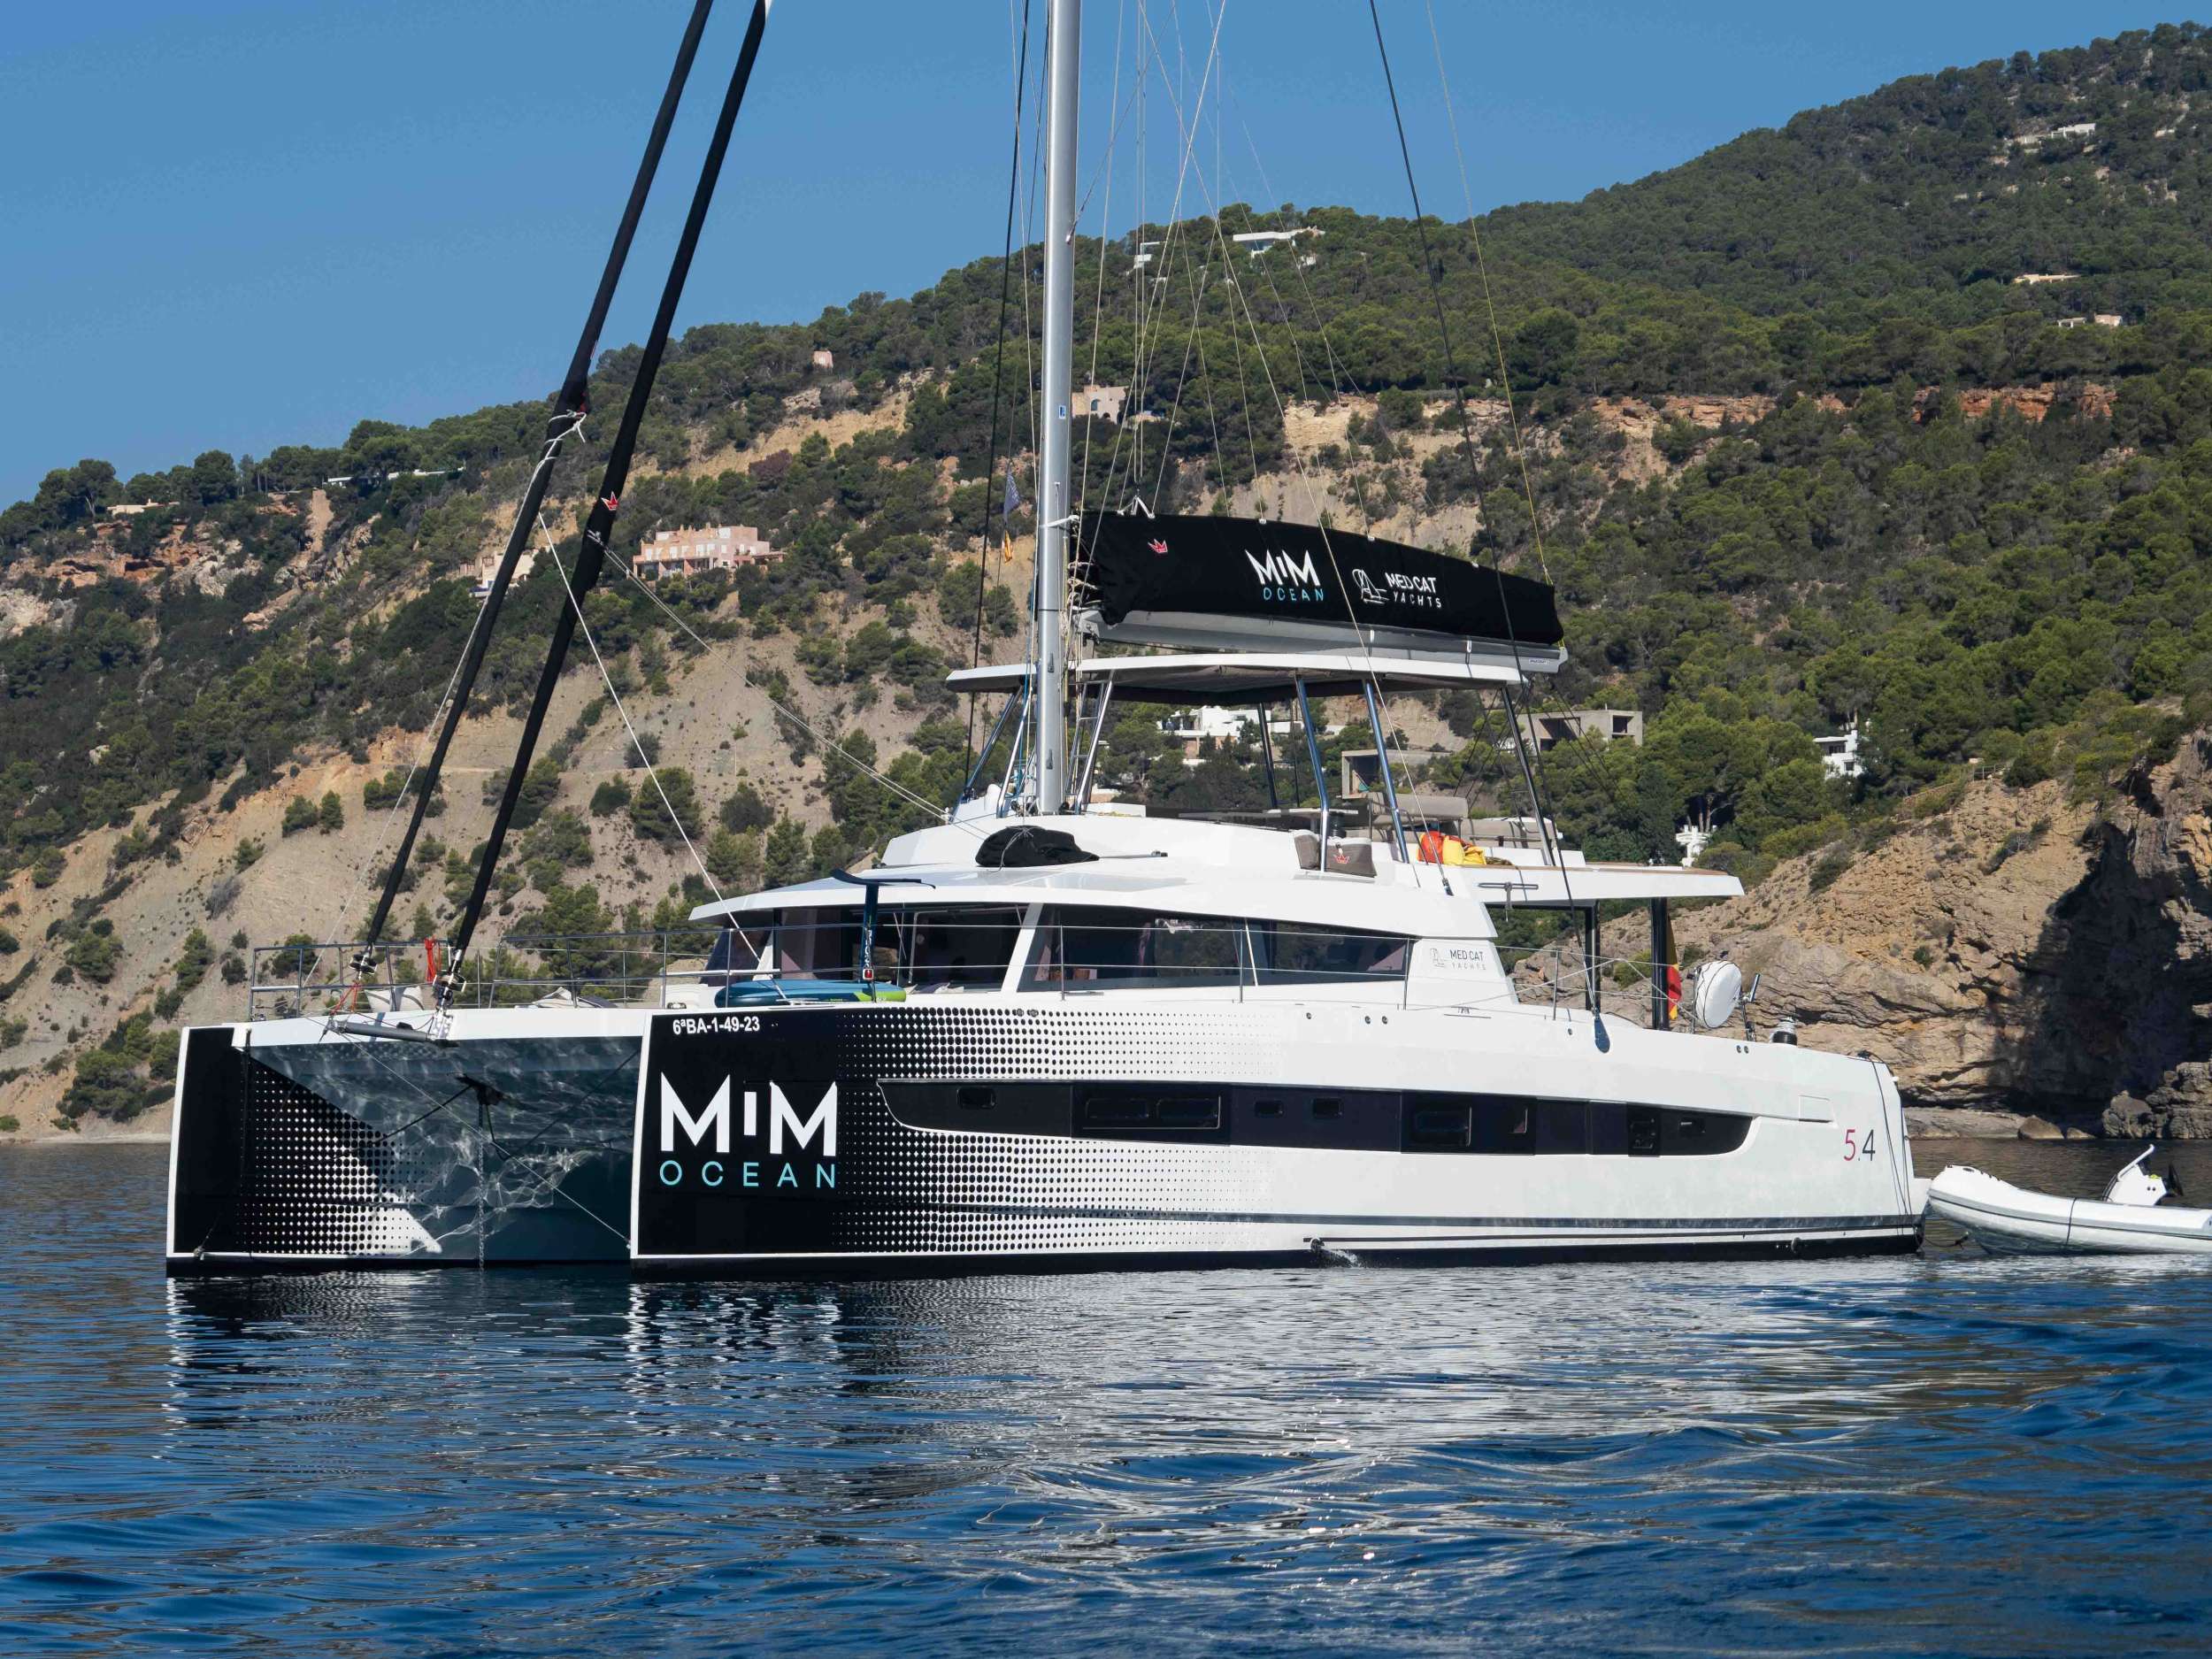 MIM OCEAN THREE - Yacht Charter Las Palmas de Gran Canaria & Boat hire in W. Med - Spain/Balearics, Caribbean Leewards, Caribbean Windwards, Caribbean Virgin Islands (BVI) 1